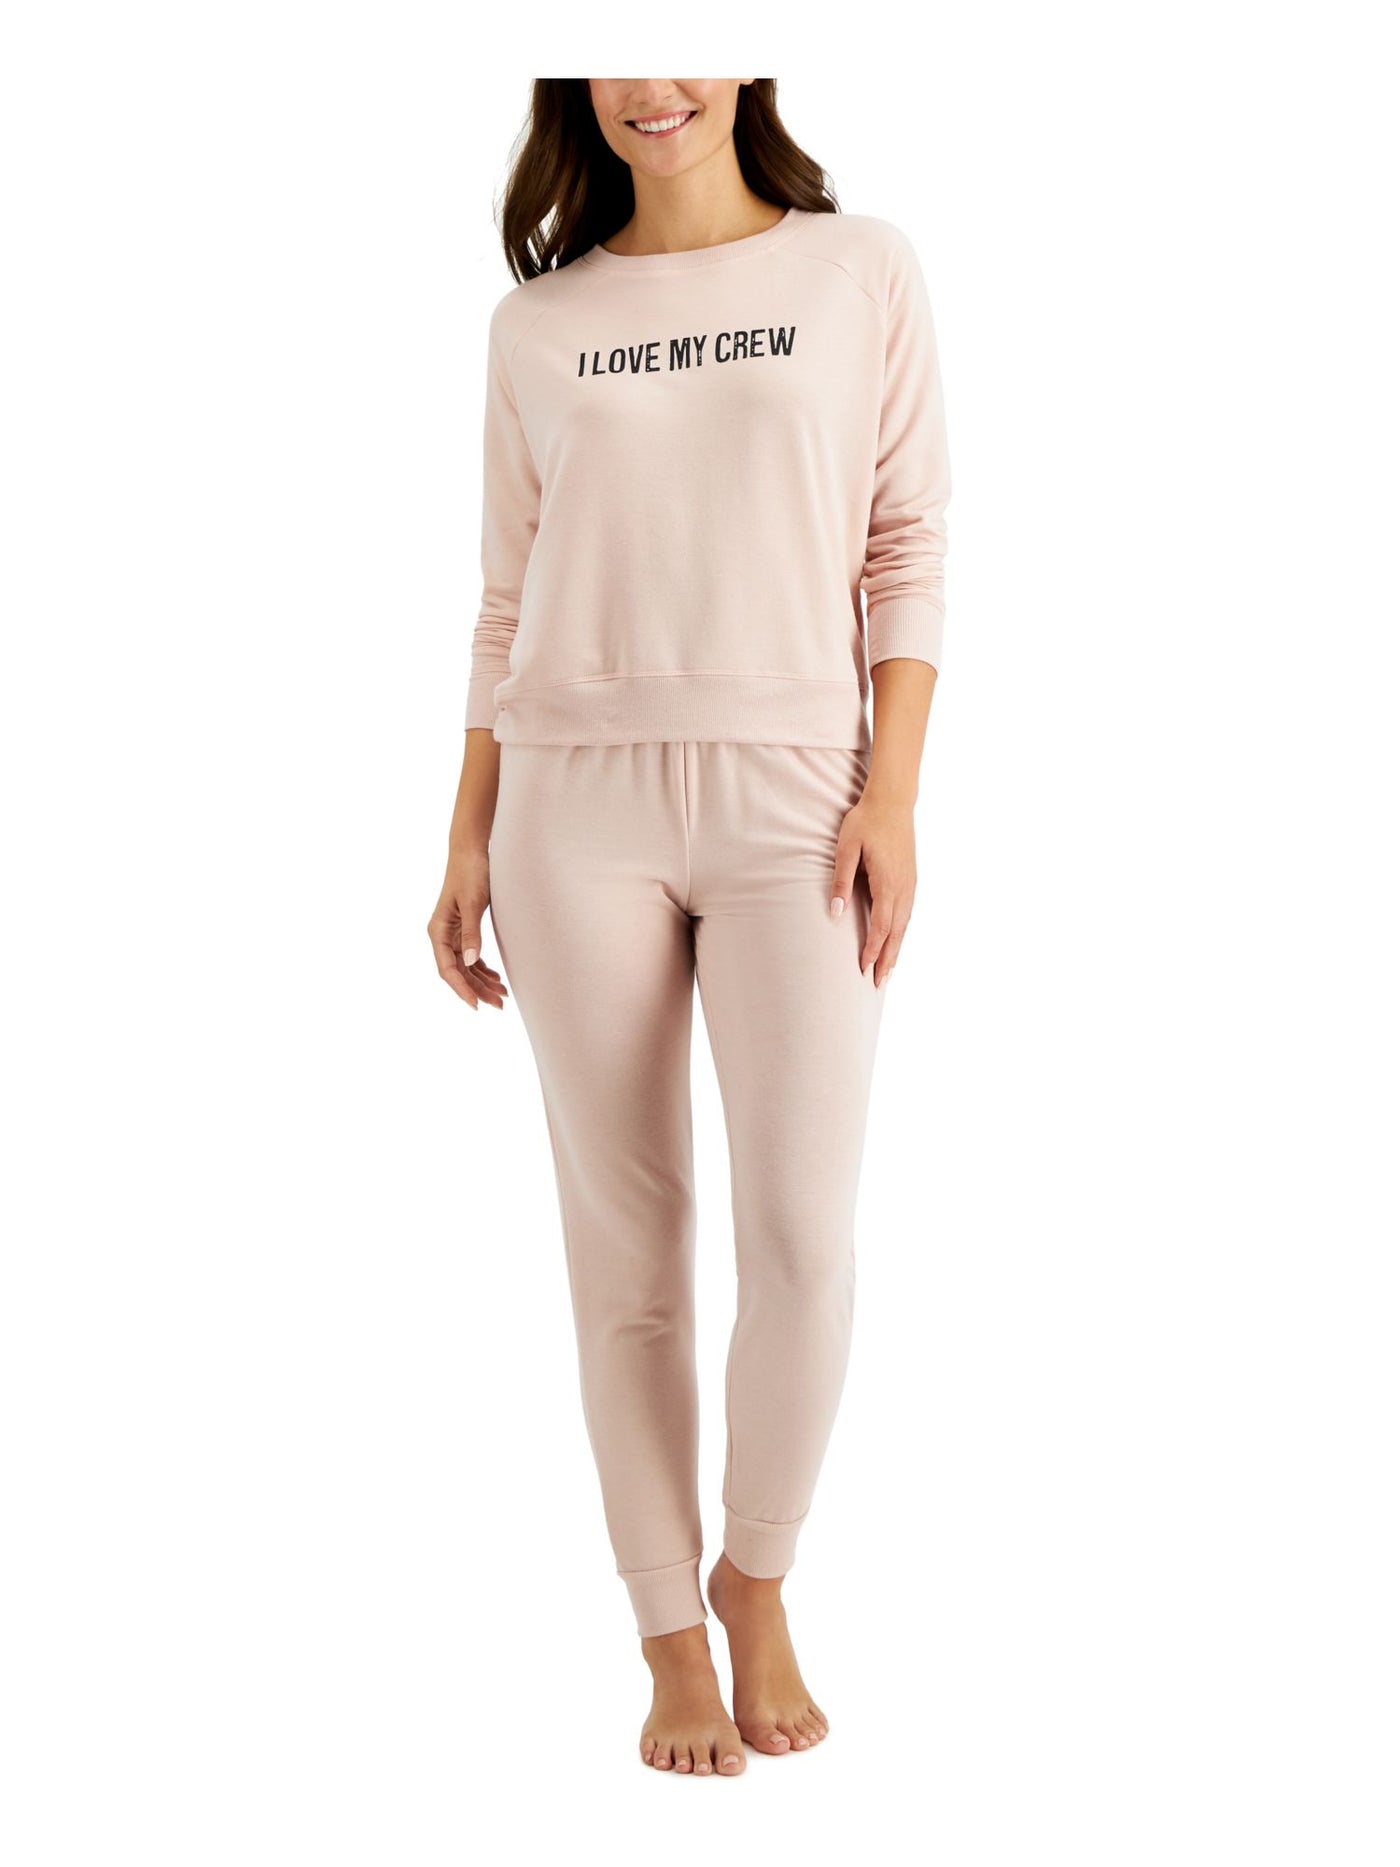 FAMILY PJs Womens Pink Printed Top Long Sleeve Lounge Pants Stretch Pajamas XL